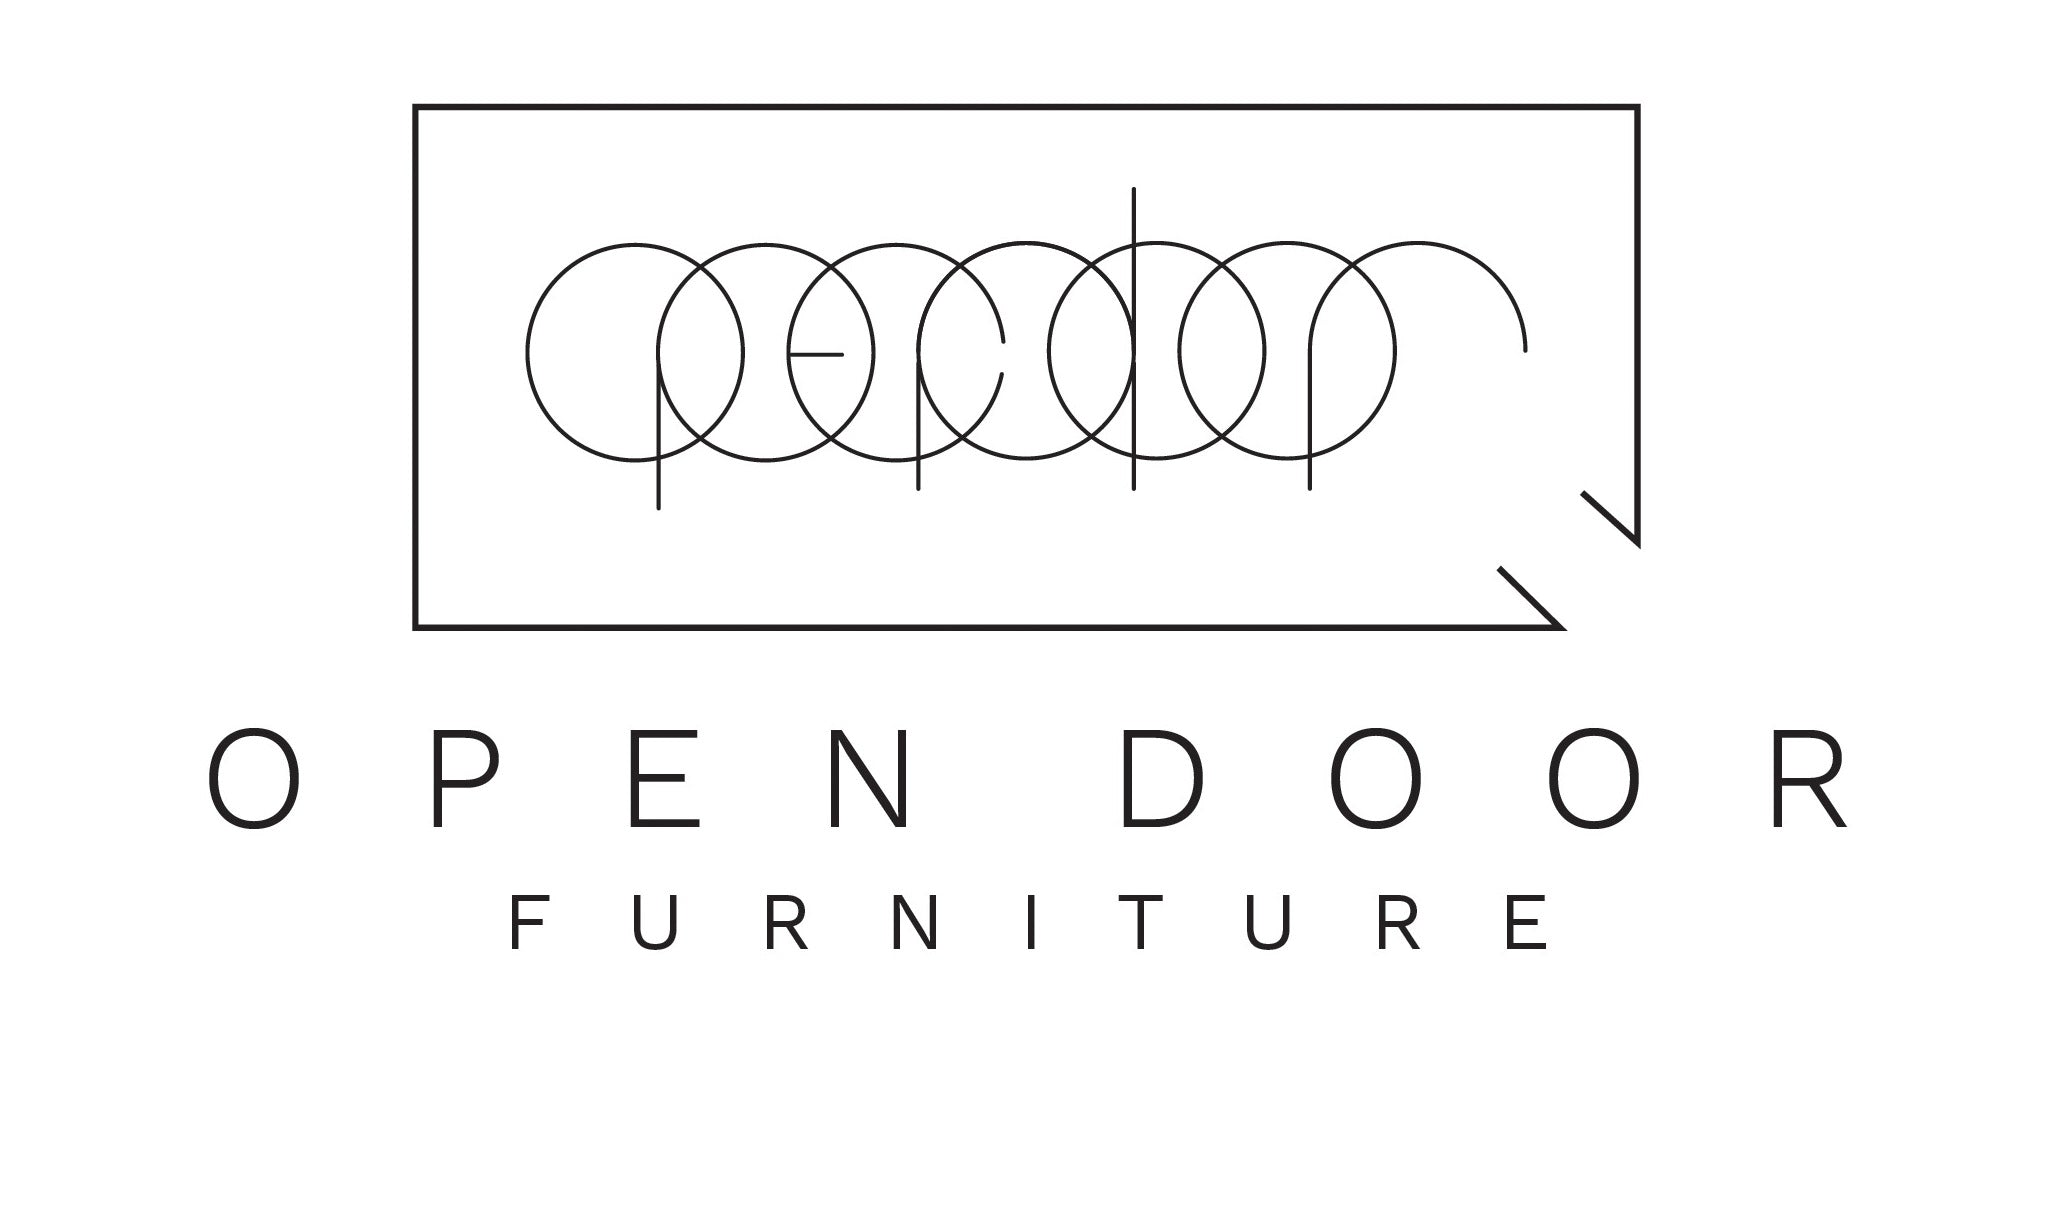 Interview: Andrew DePalma Concerning the Origin and Future of Open Door Furniture